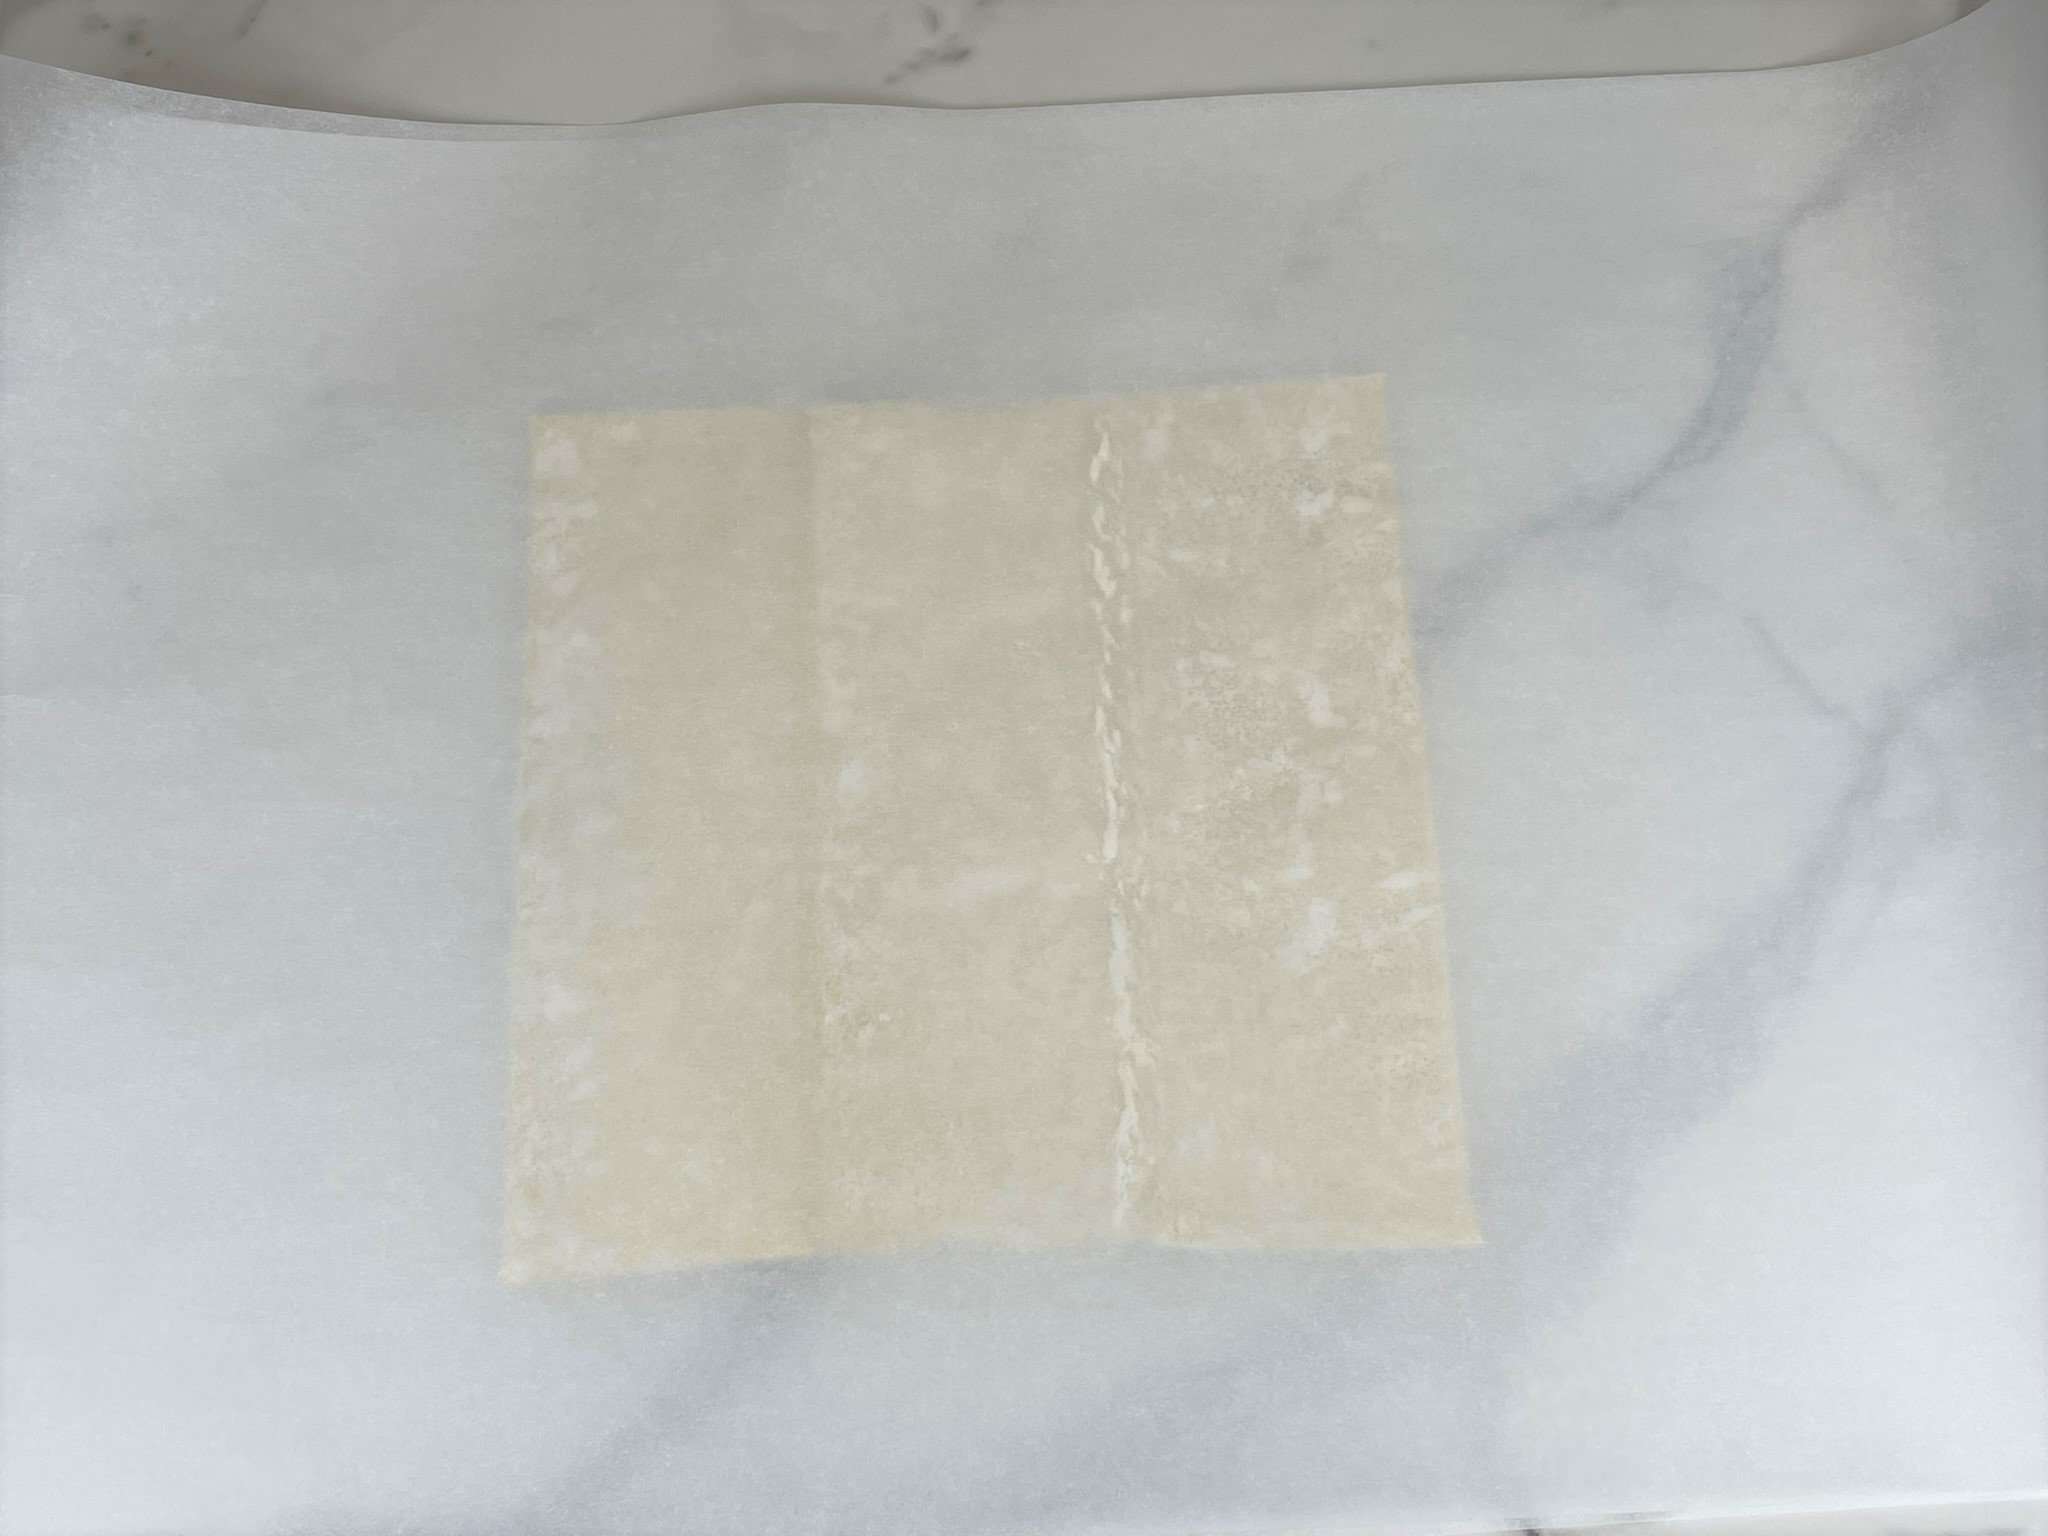 Parchment paper on top.